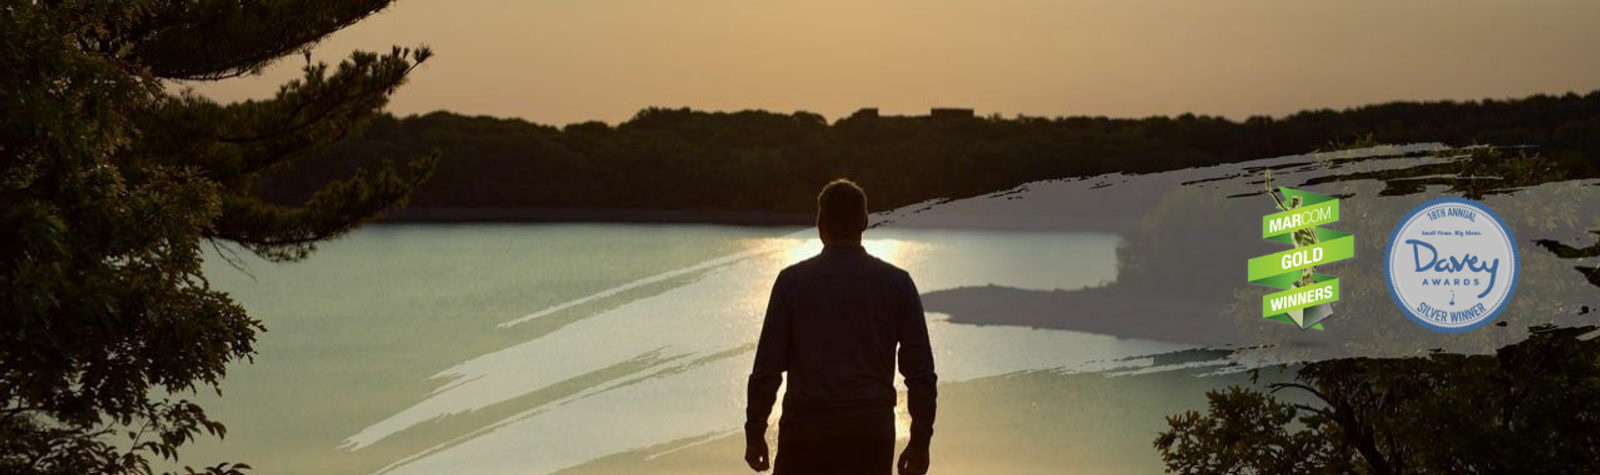 man looking out at landscape of a sunrise, davey awards logo and marcom award logo